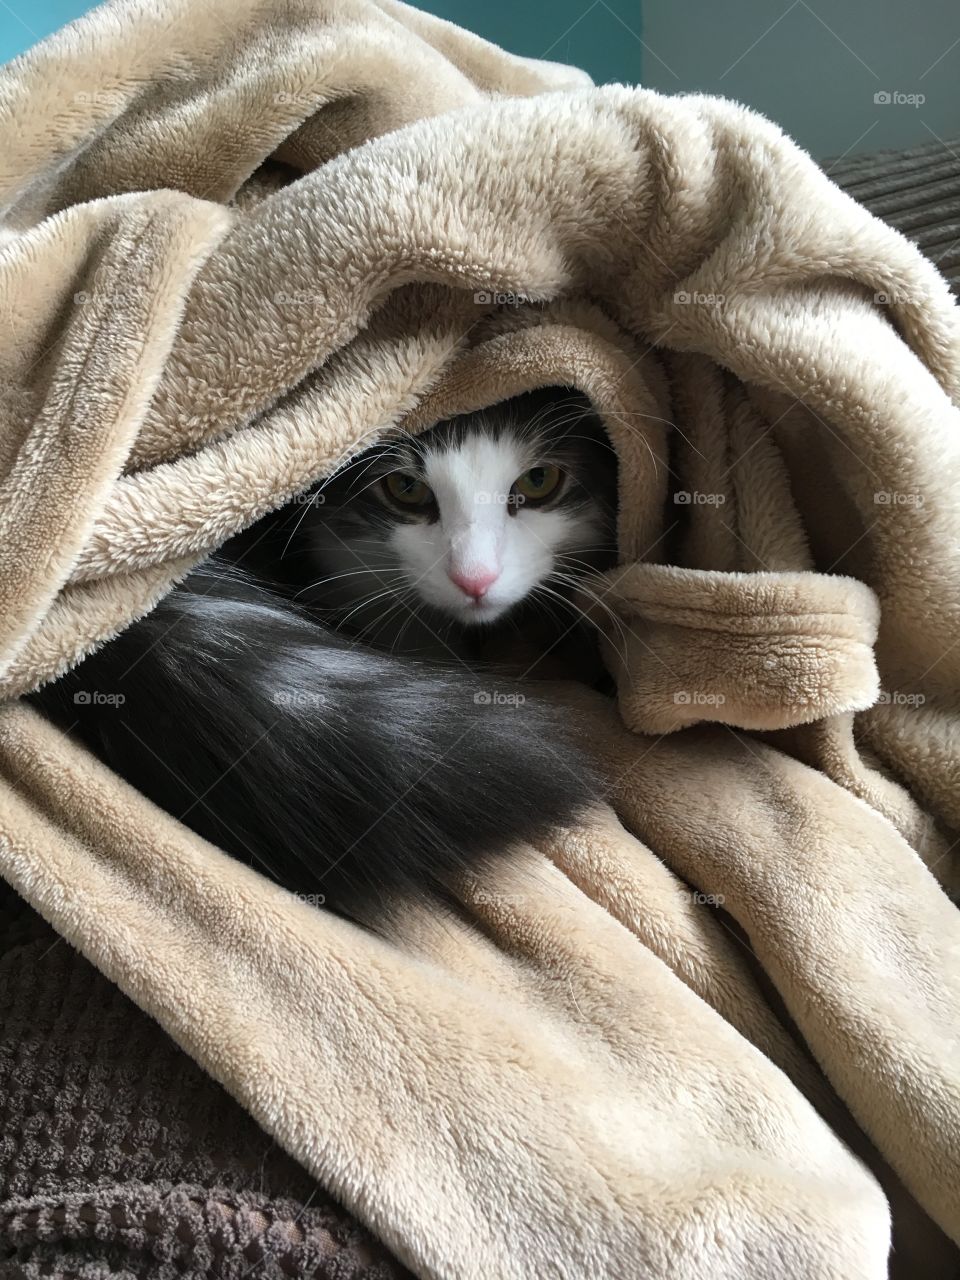 Hiding under a blanket 